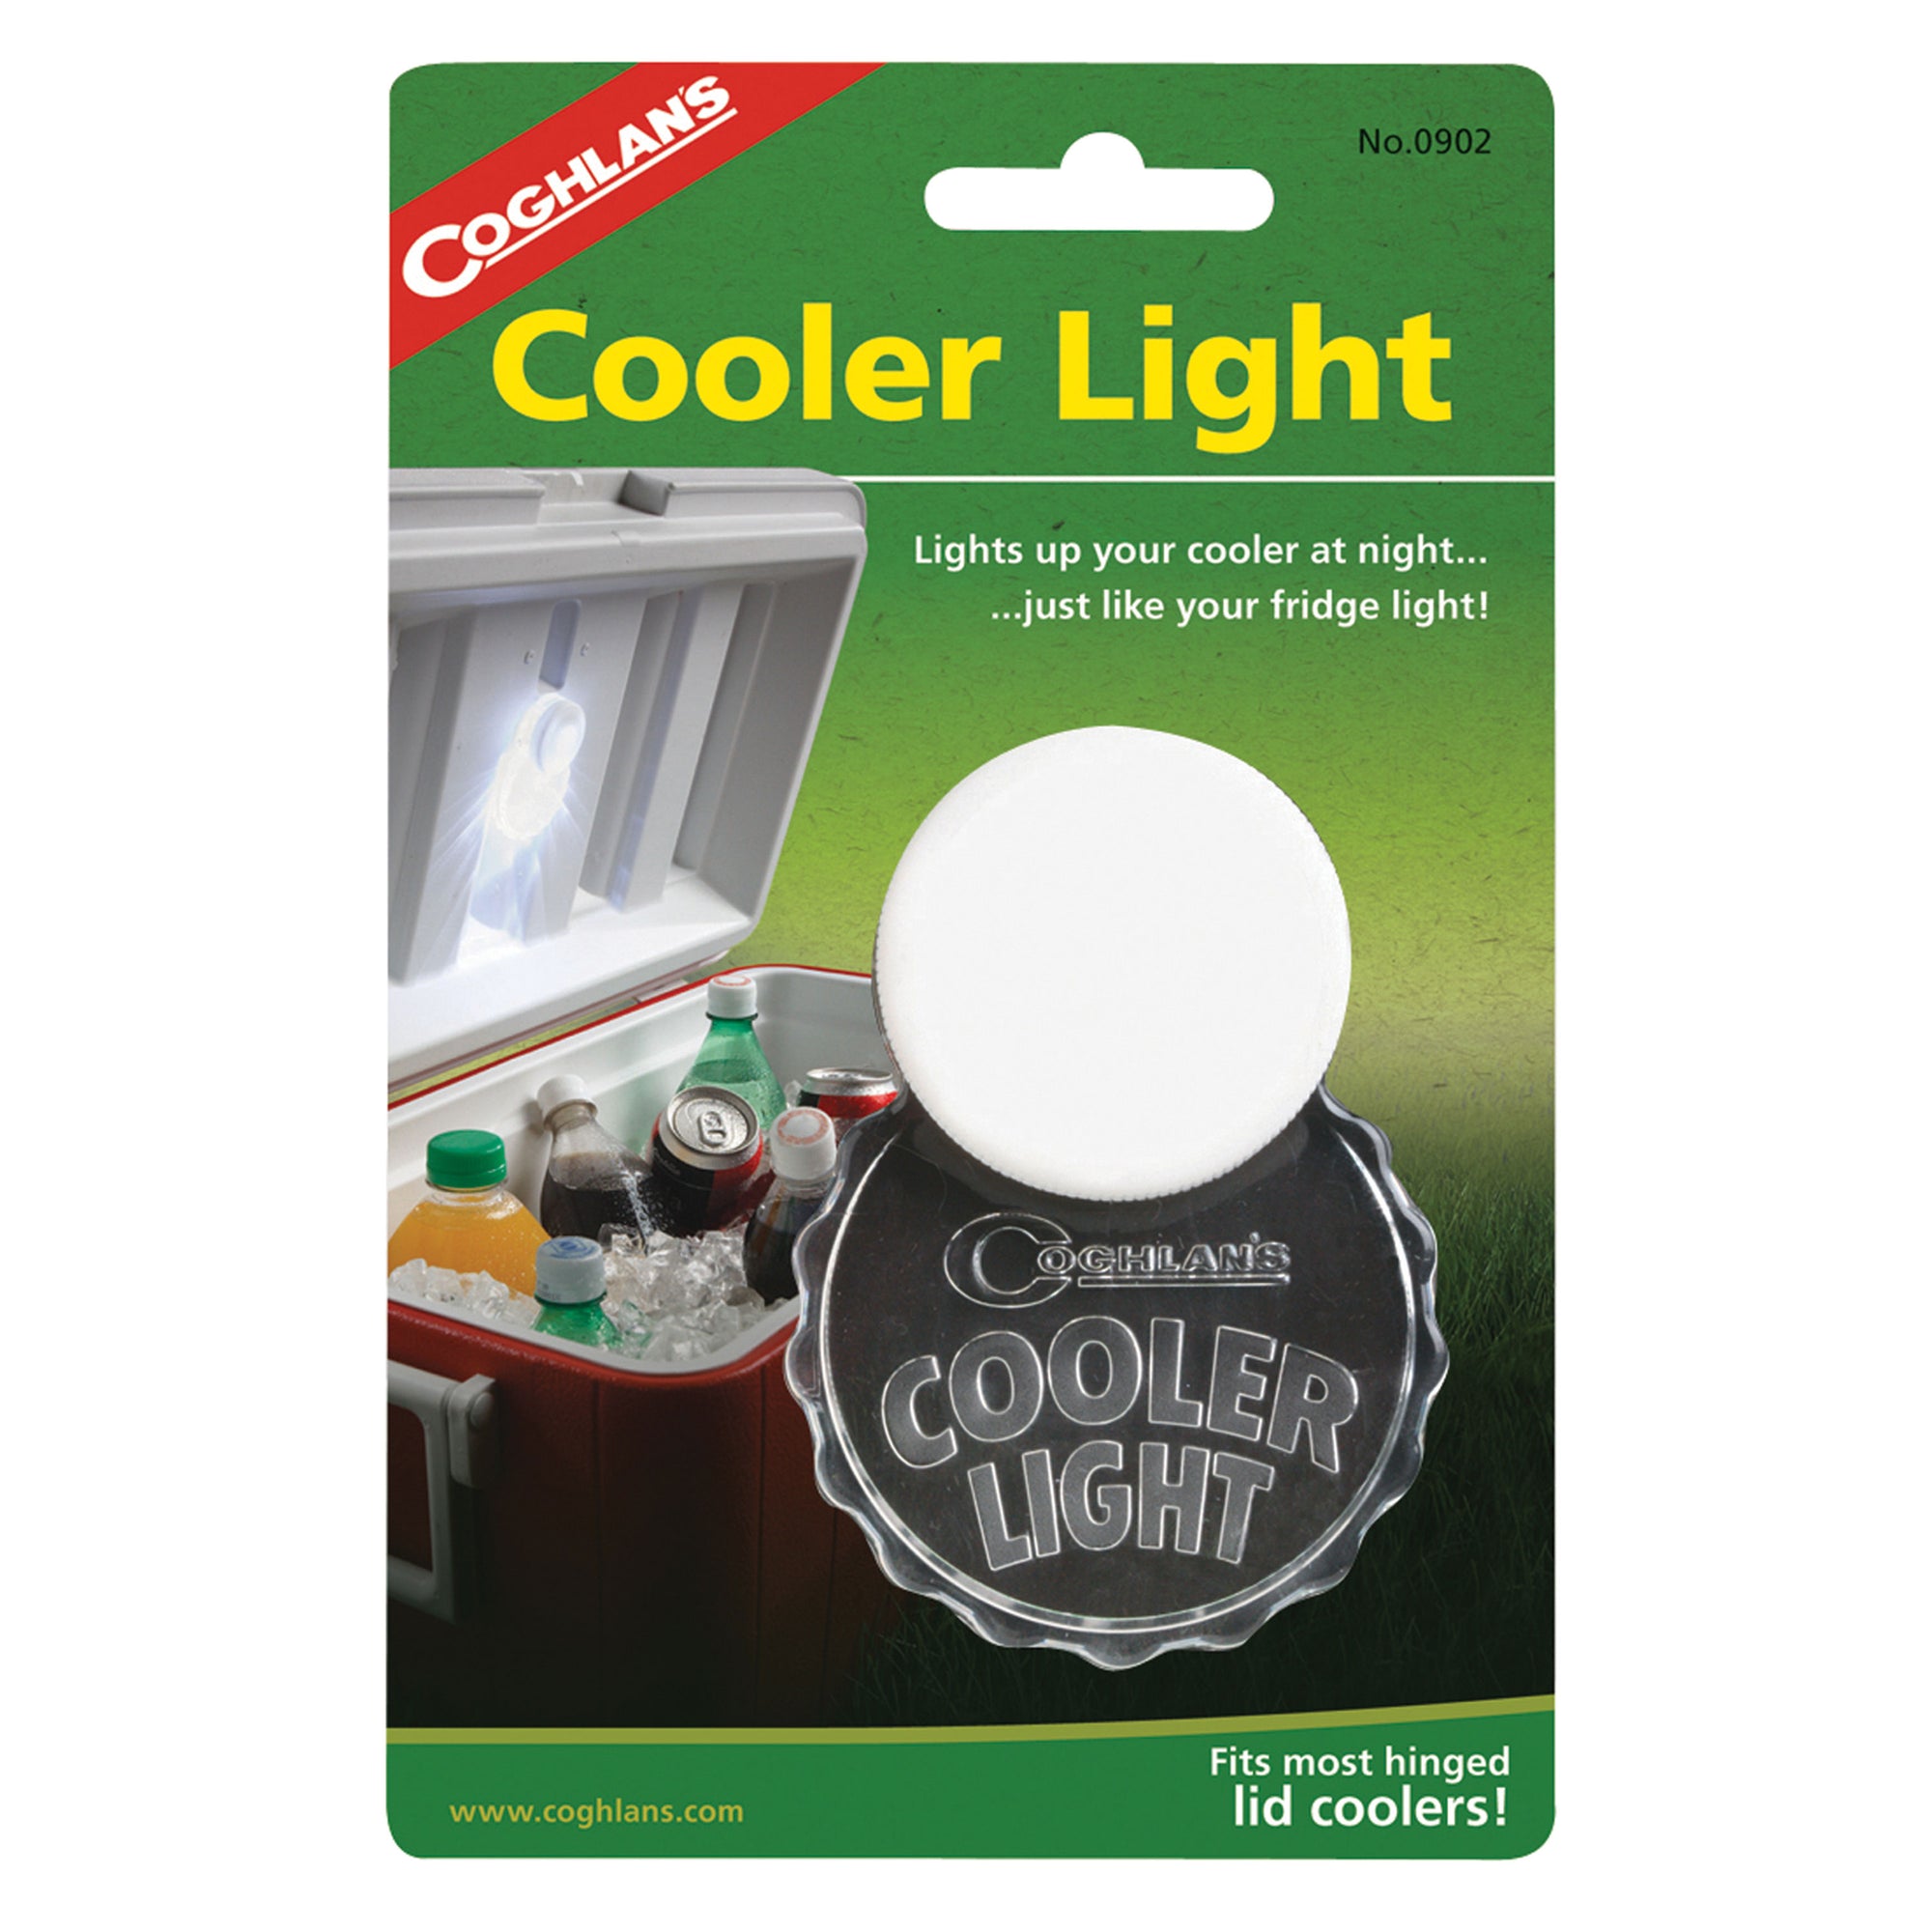 Coghlan's 0902 9" Cooler Light